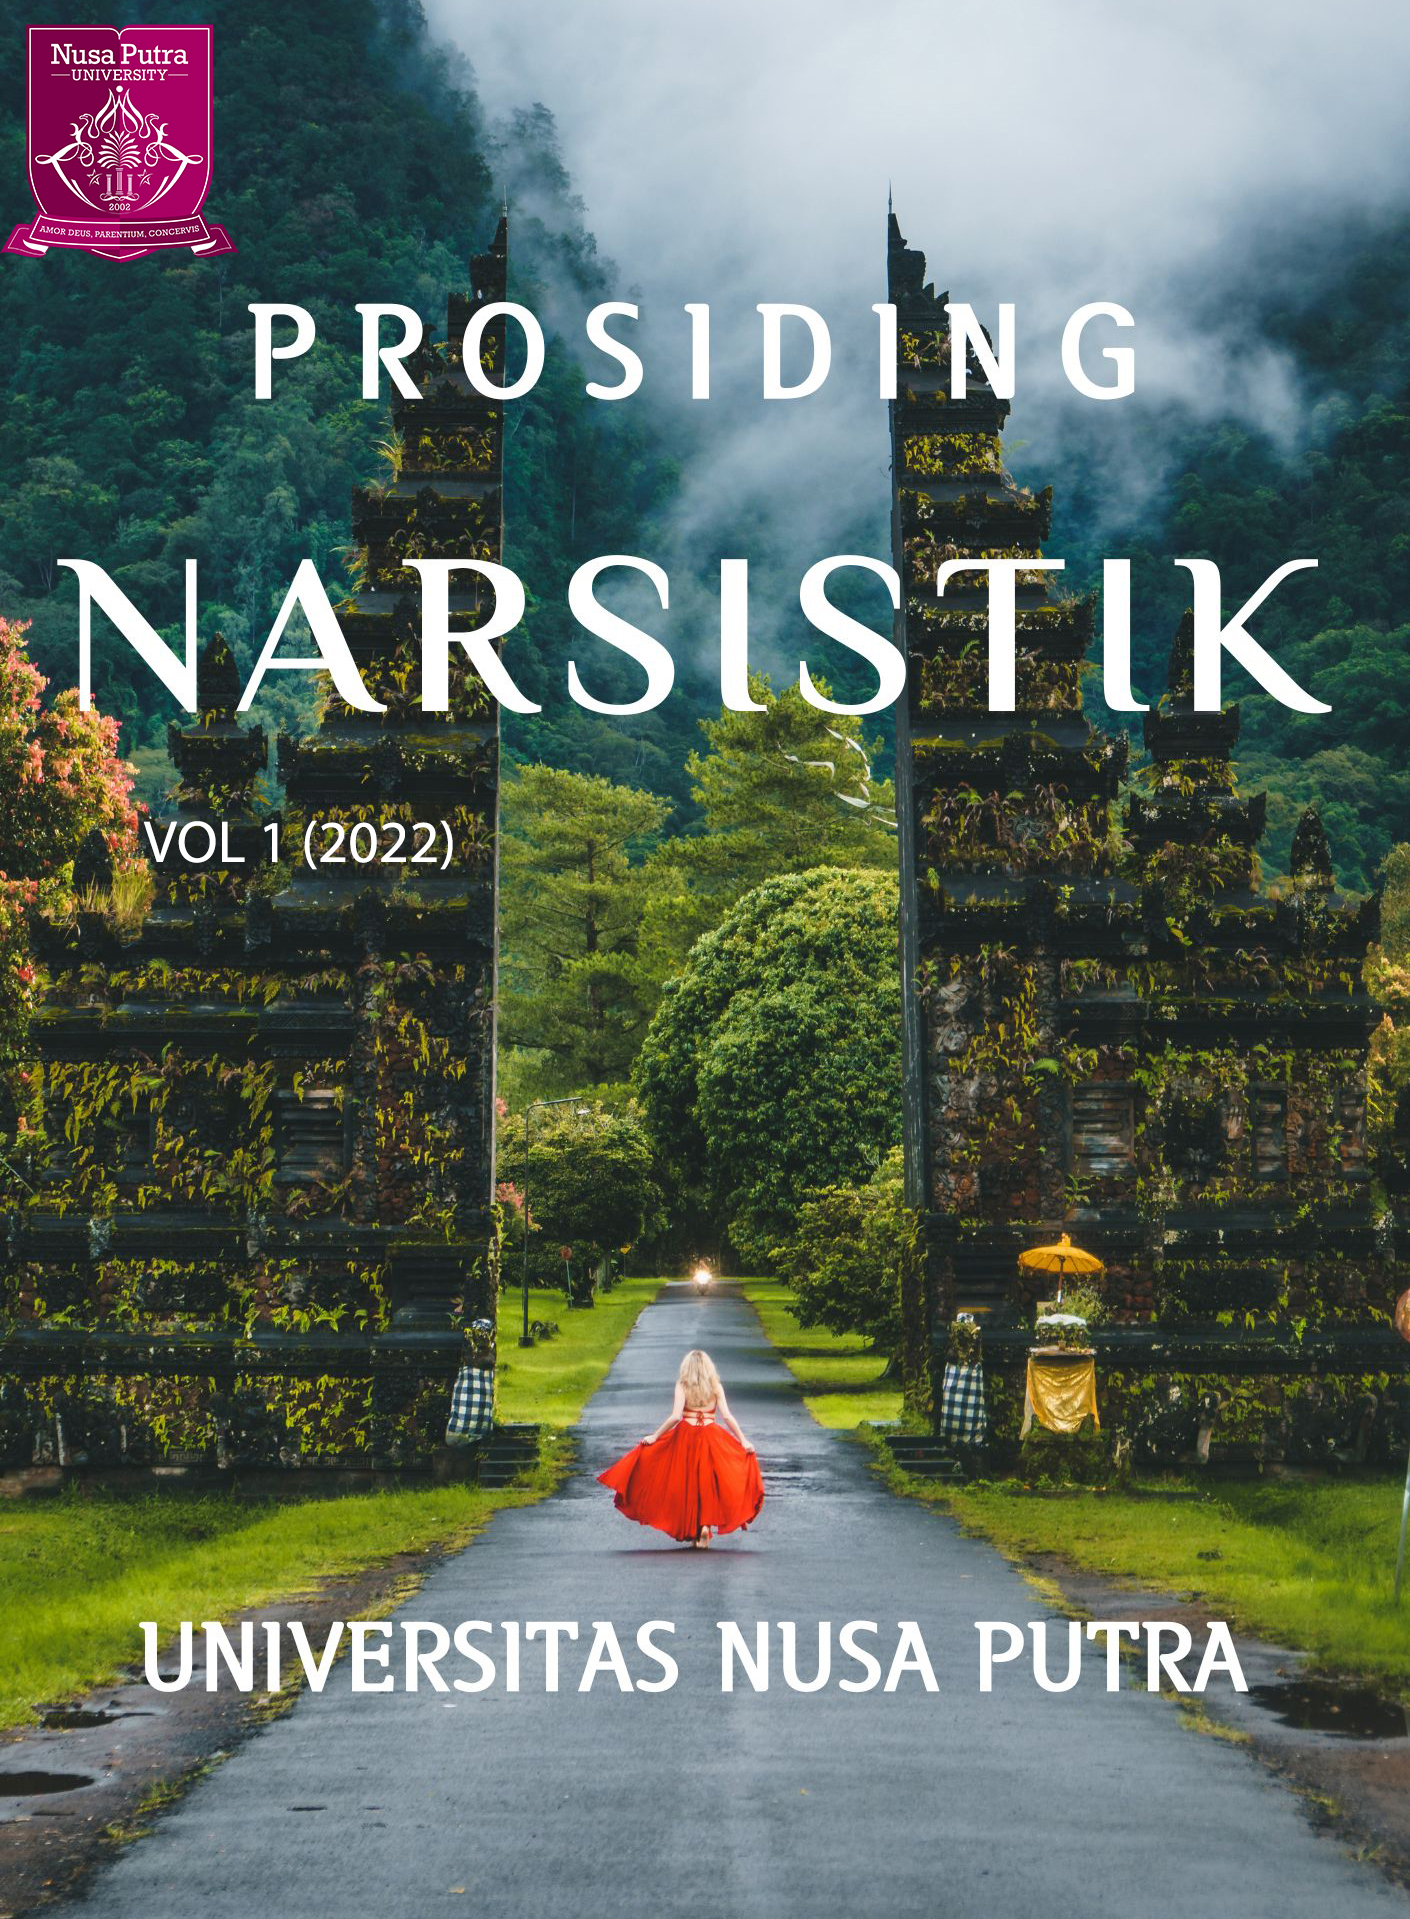 					Lihat Vol 1 (2022): Prosiding Narsistik
				